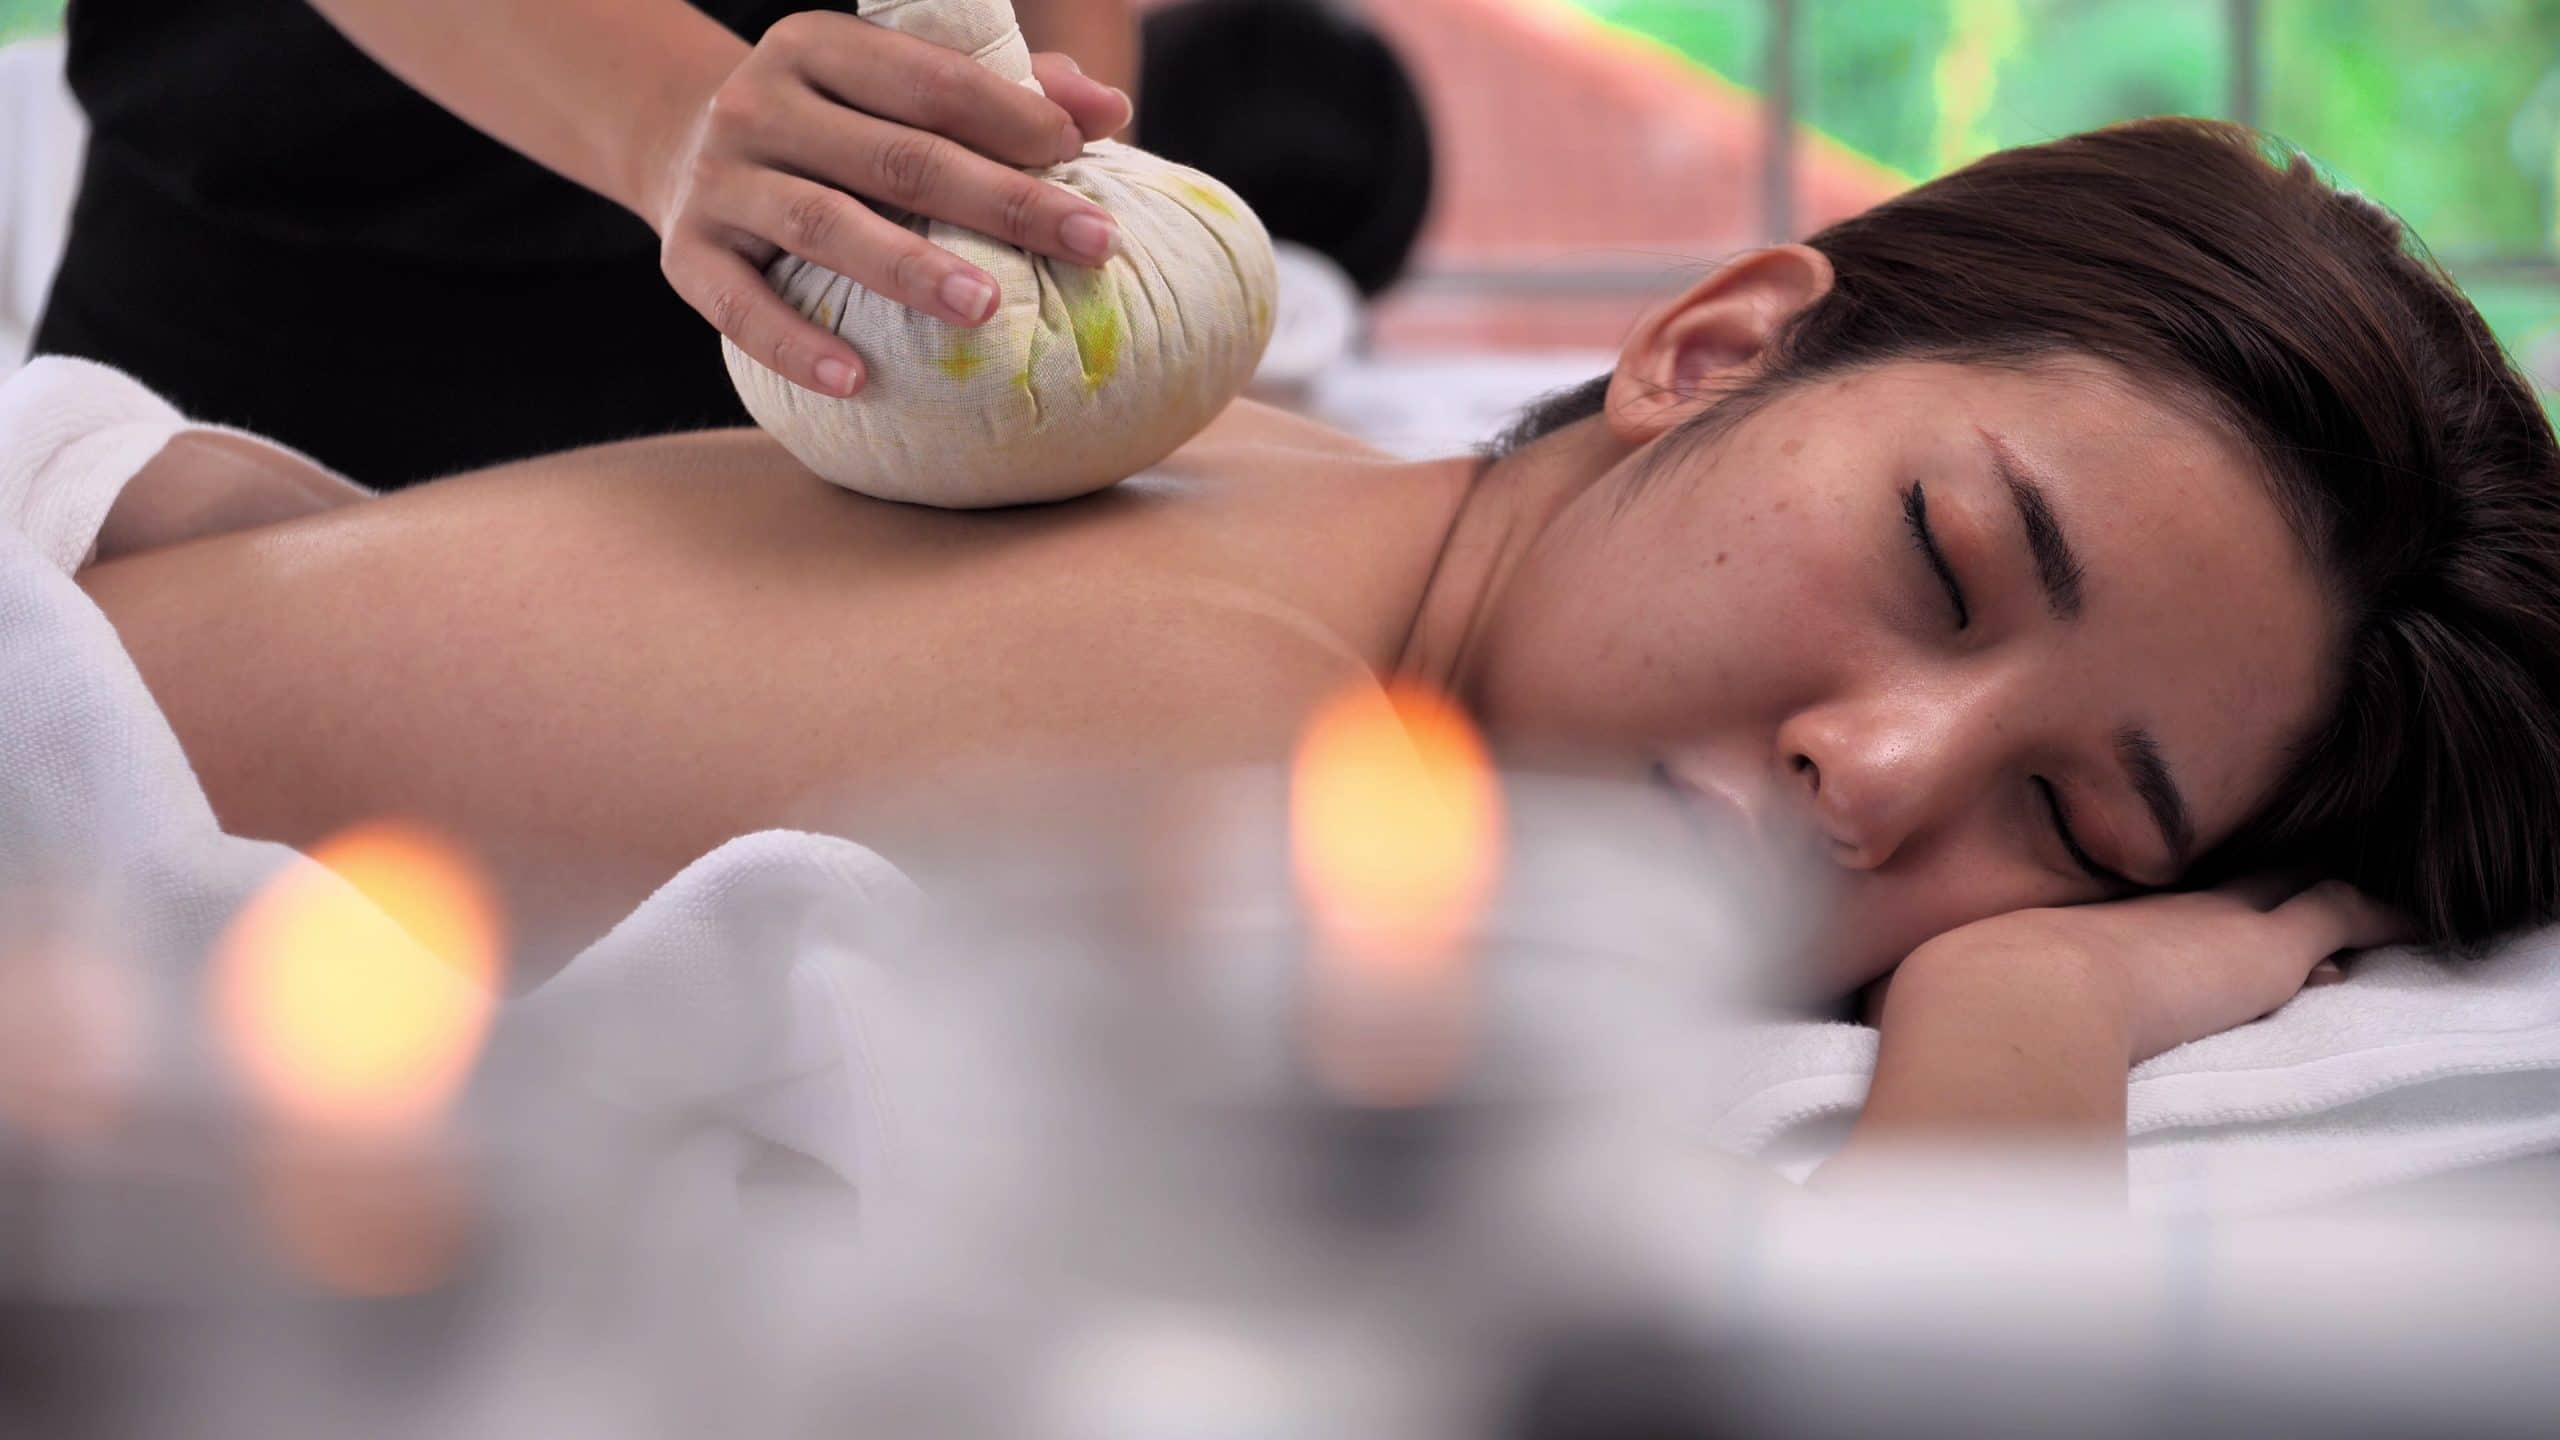 arom dee thai toulouse salon massage thai toulouse arom dee thaï massage thai herbes massage thai toulouse 31000 haute garonne midi pyrénées occitanie